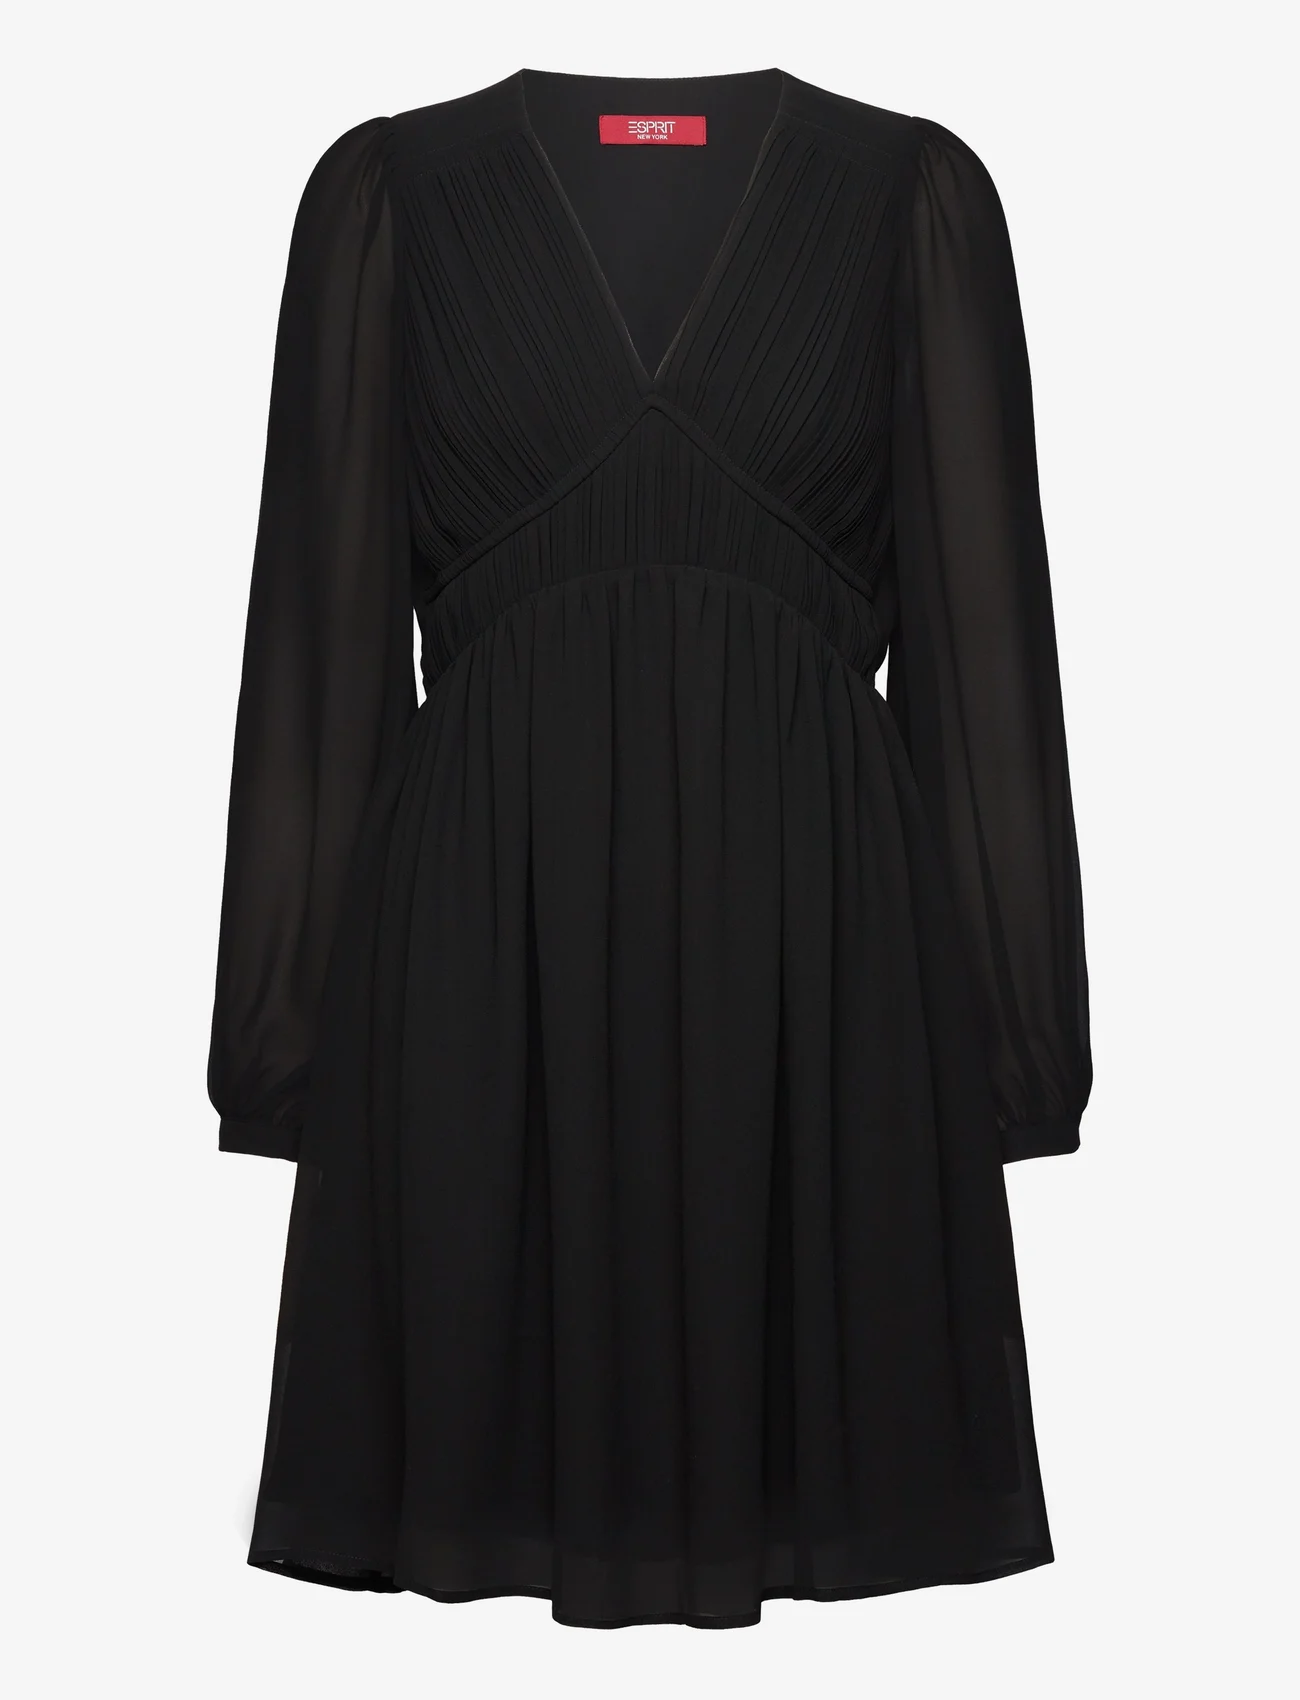 Esprit Casual - Dresses light woven - festklær til outlet-priser - black - 0